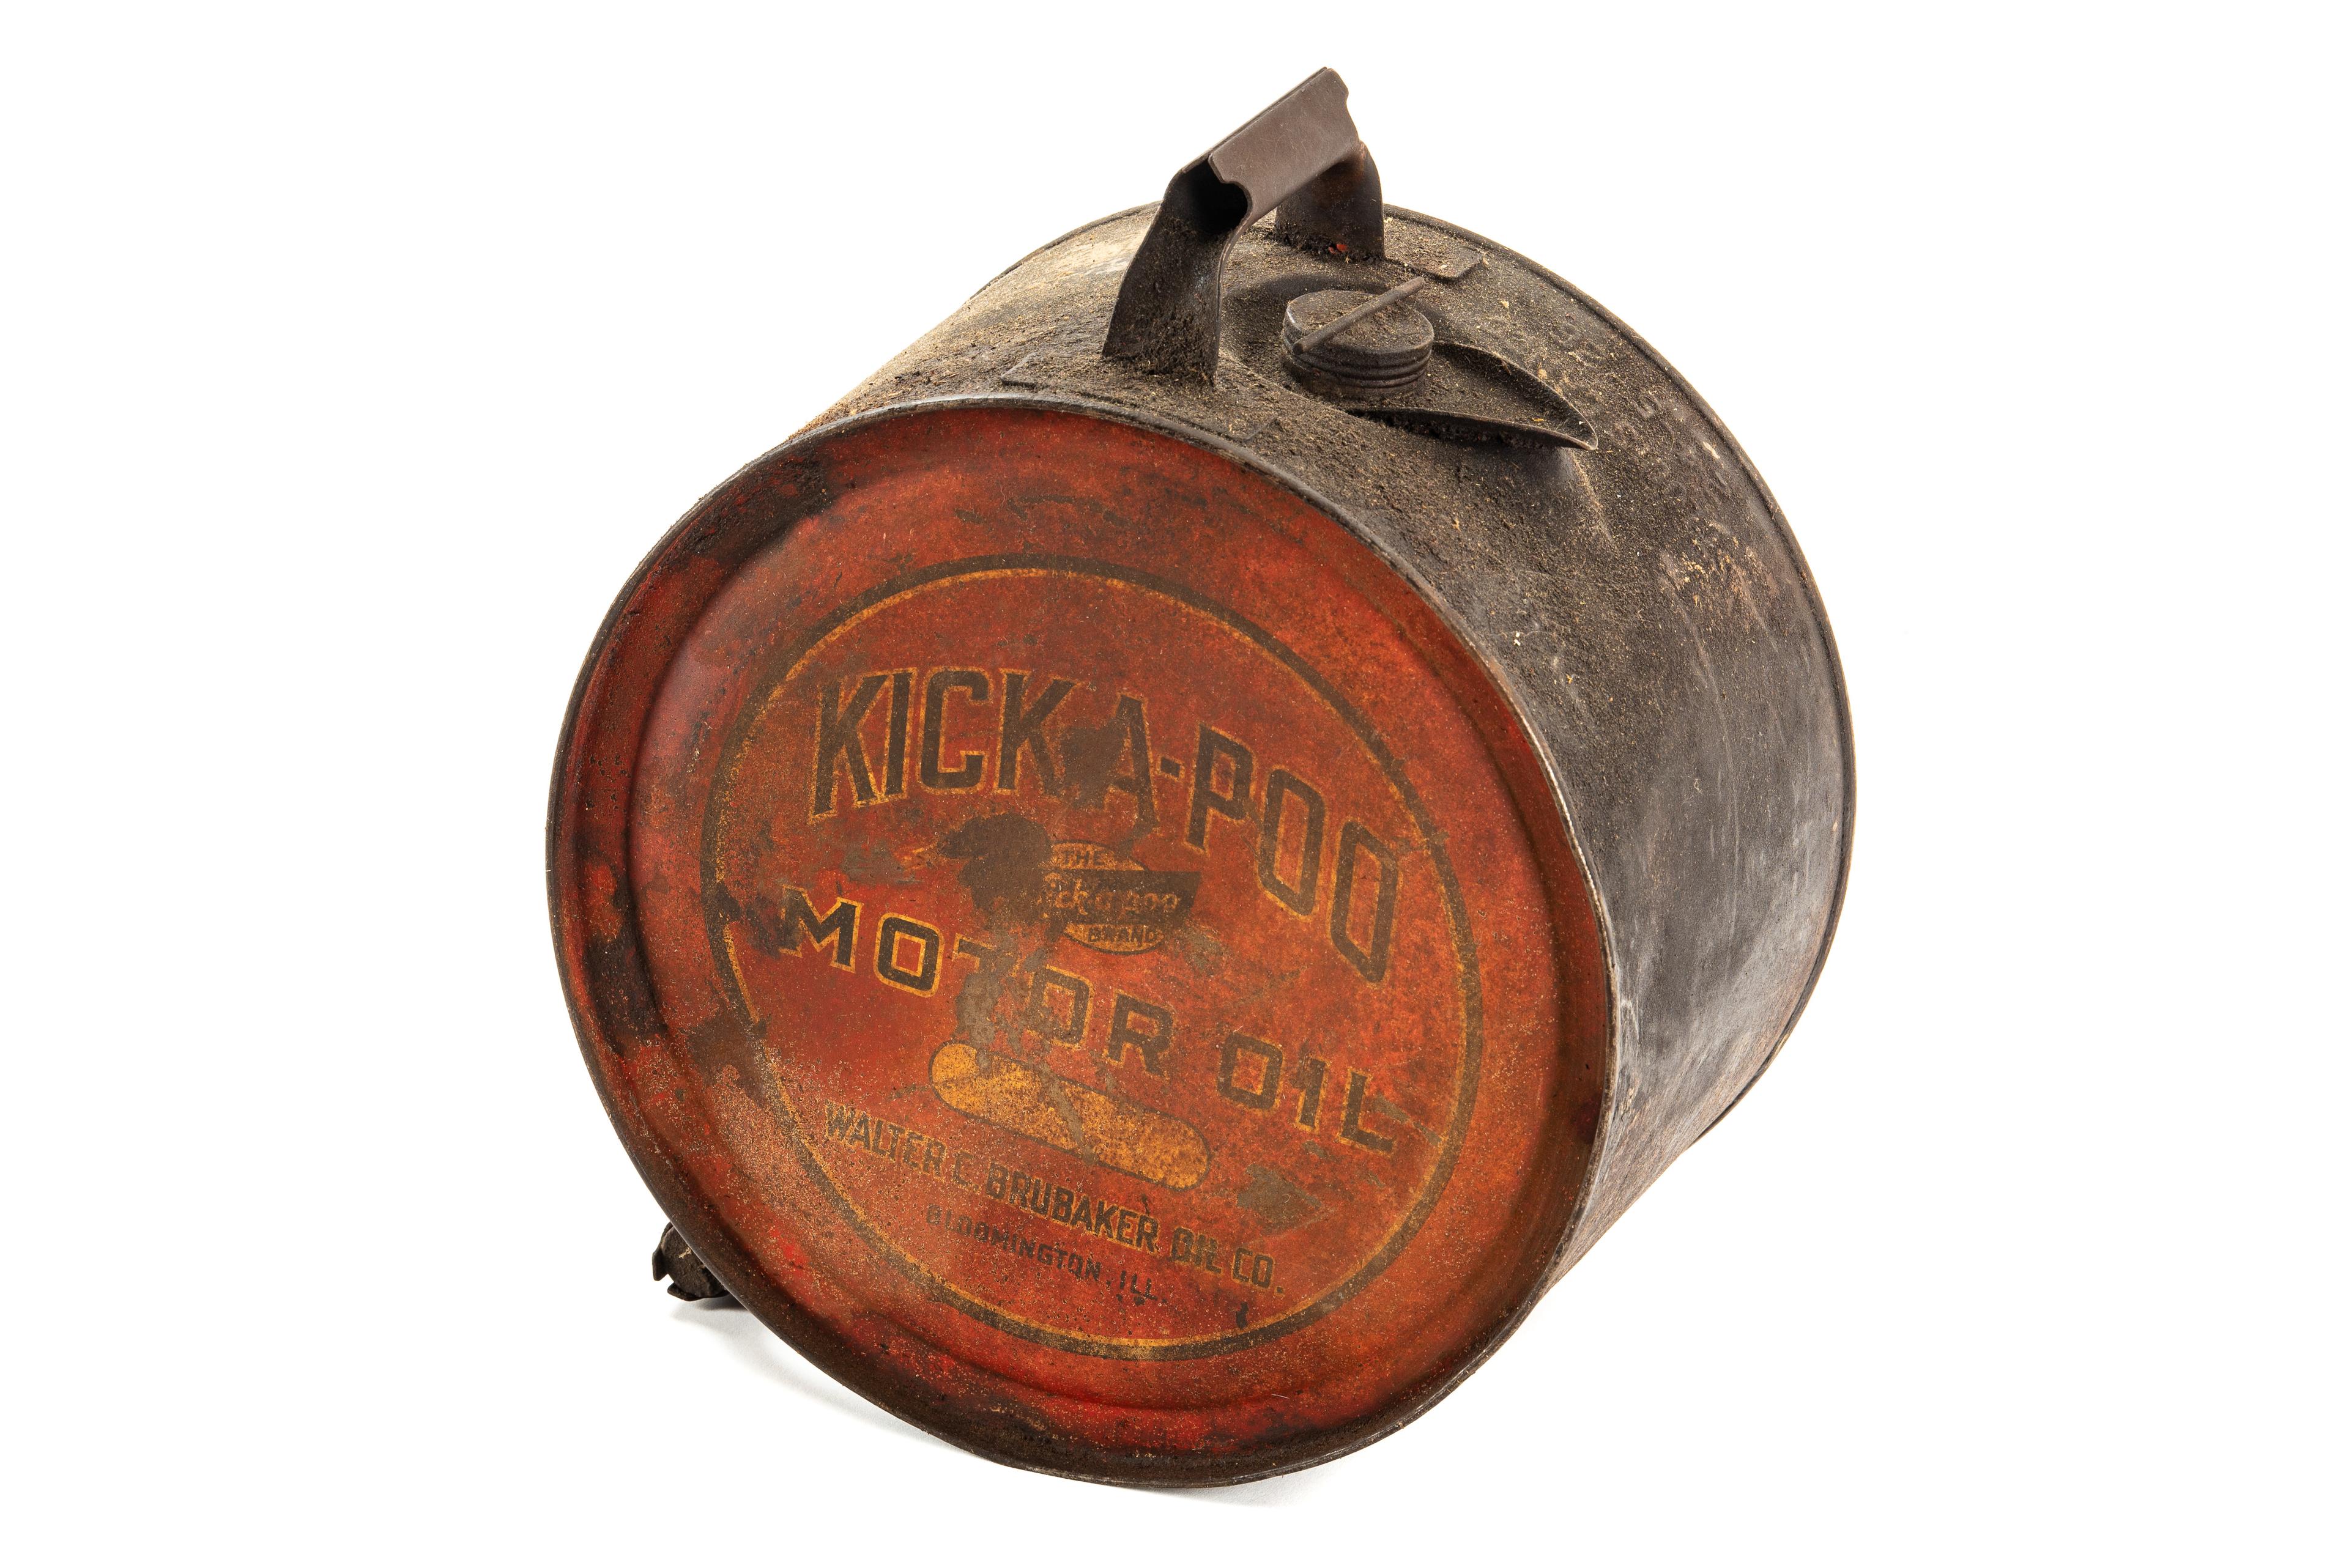 Kick-a-poo Motor Oil Metal Five Gallon Rocker Can